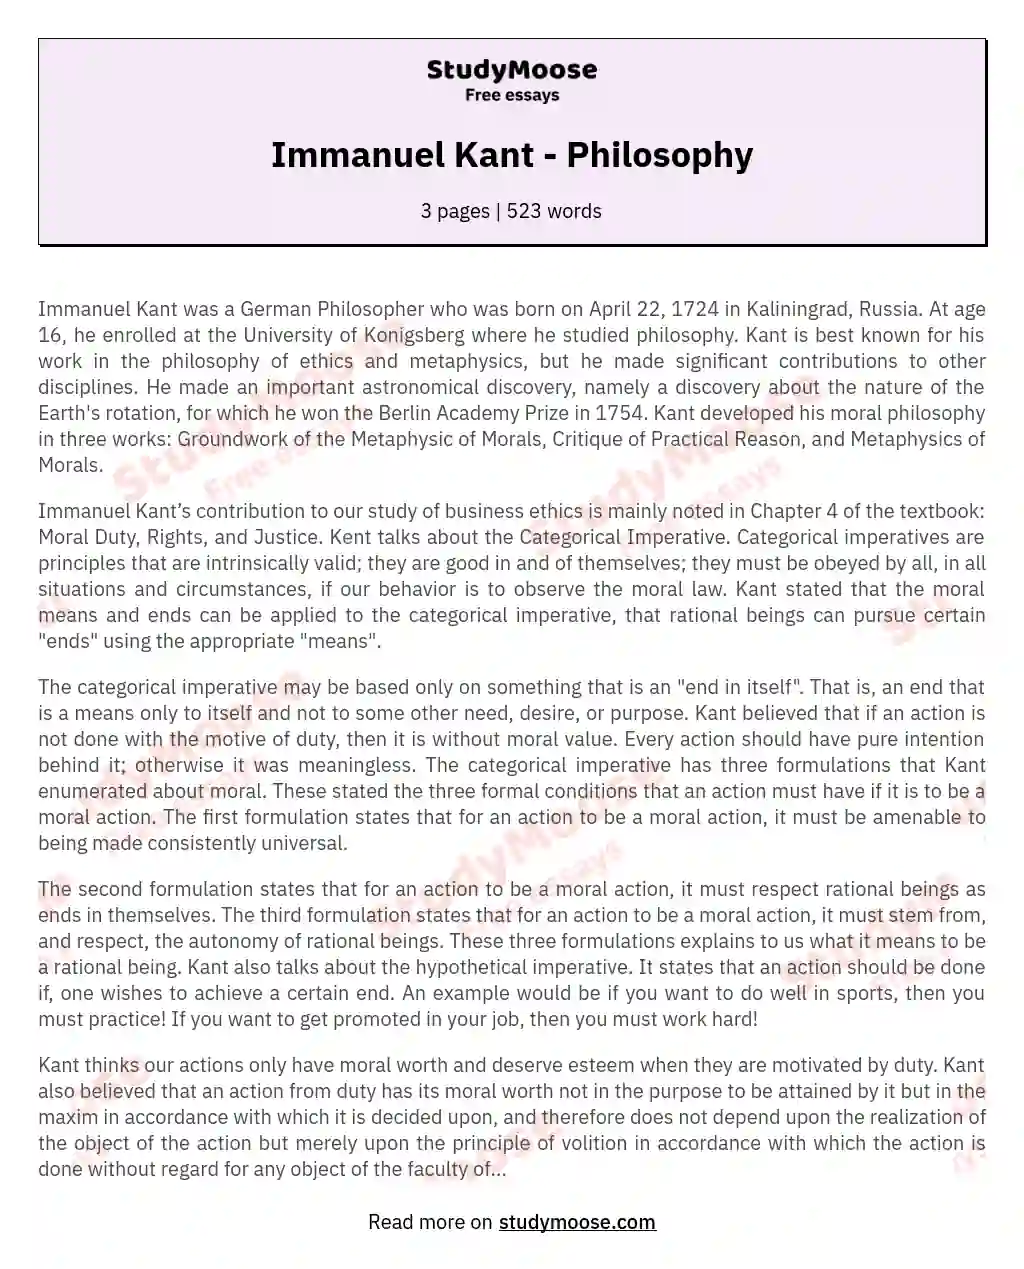 Immanuel Kant - Philosophy